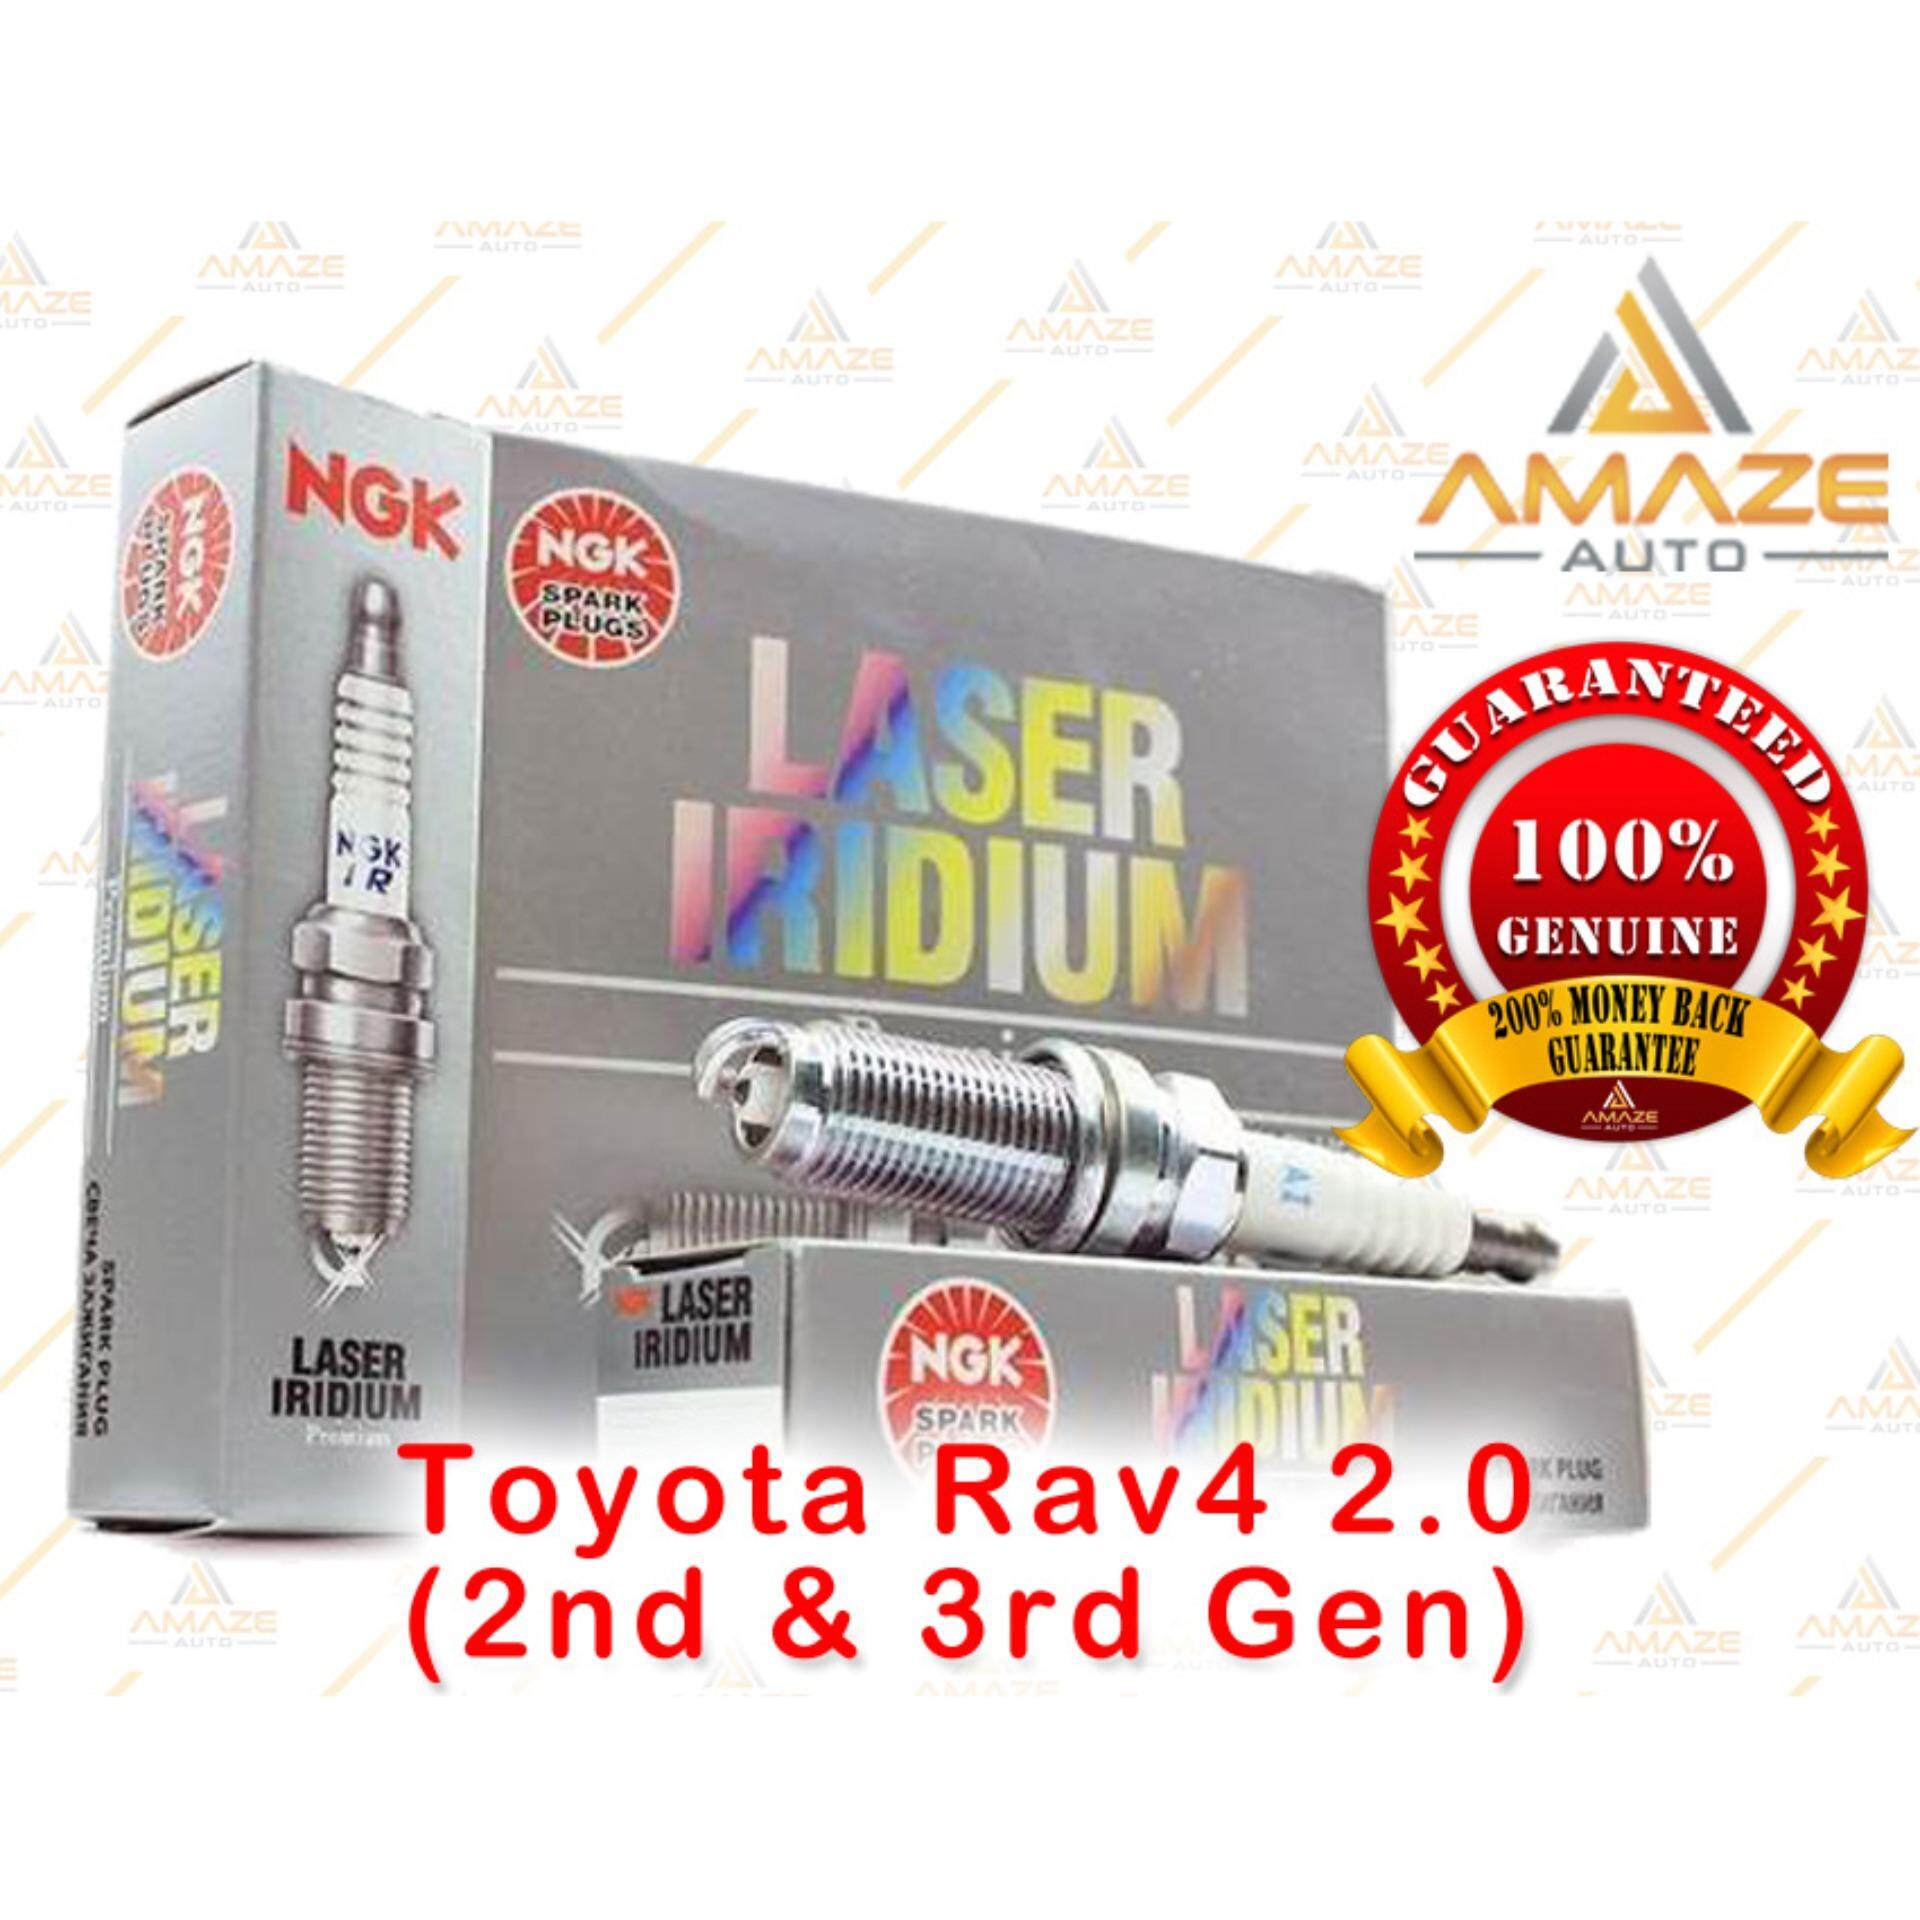 NGK Laser Iridium Spark Plug for Toyota Rav4 2.0 (2nd & 3rd Gen)